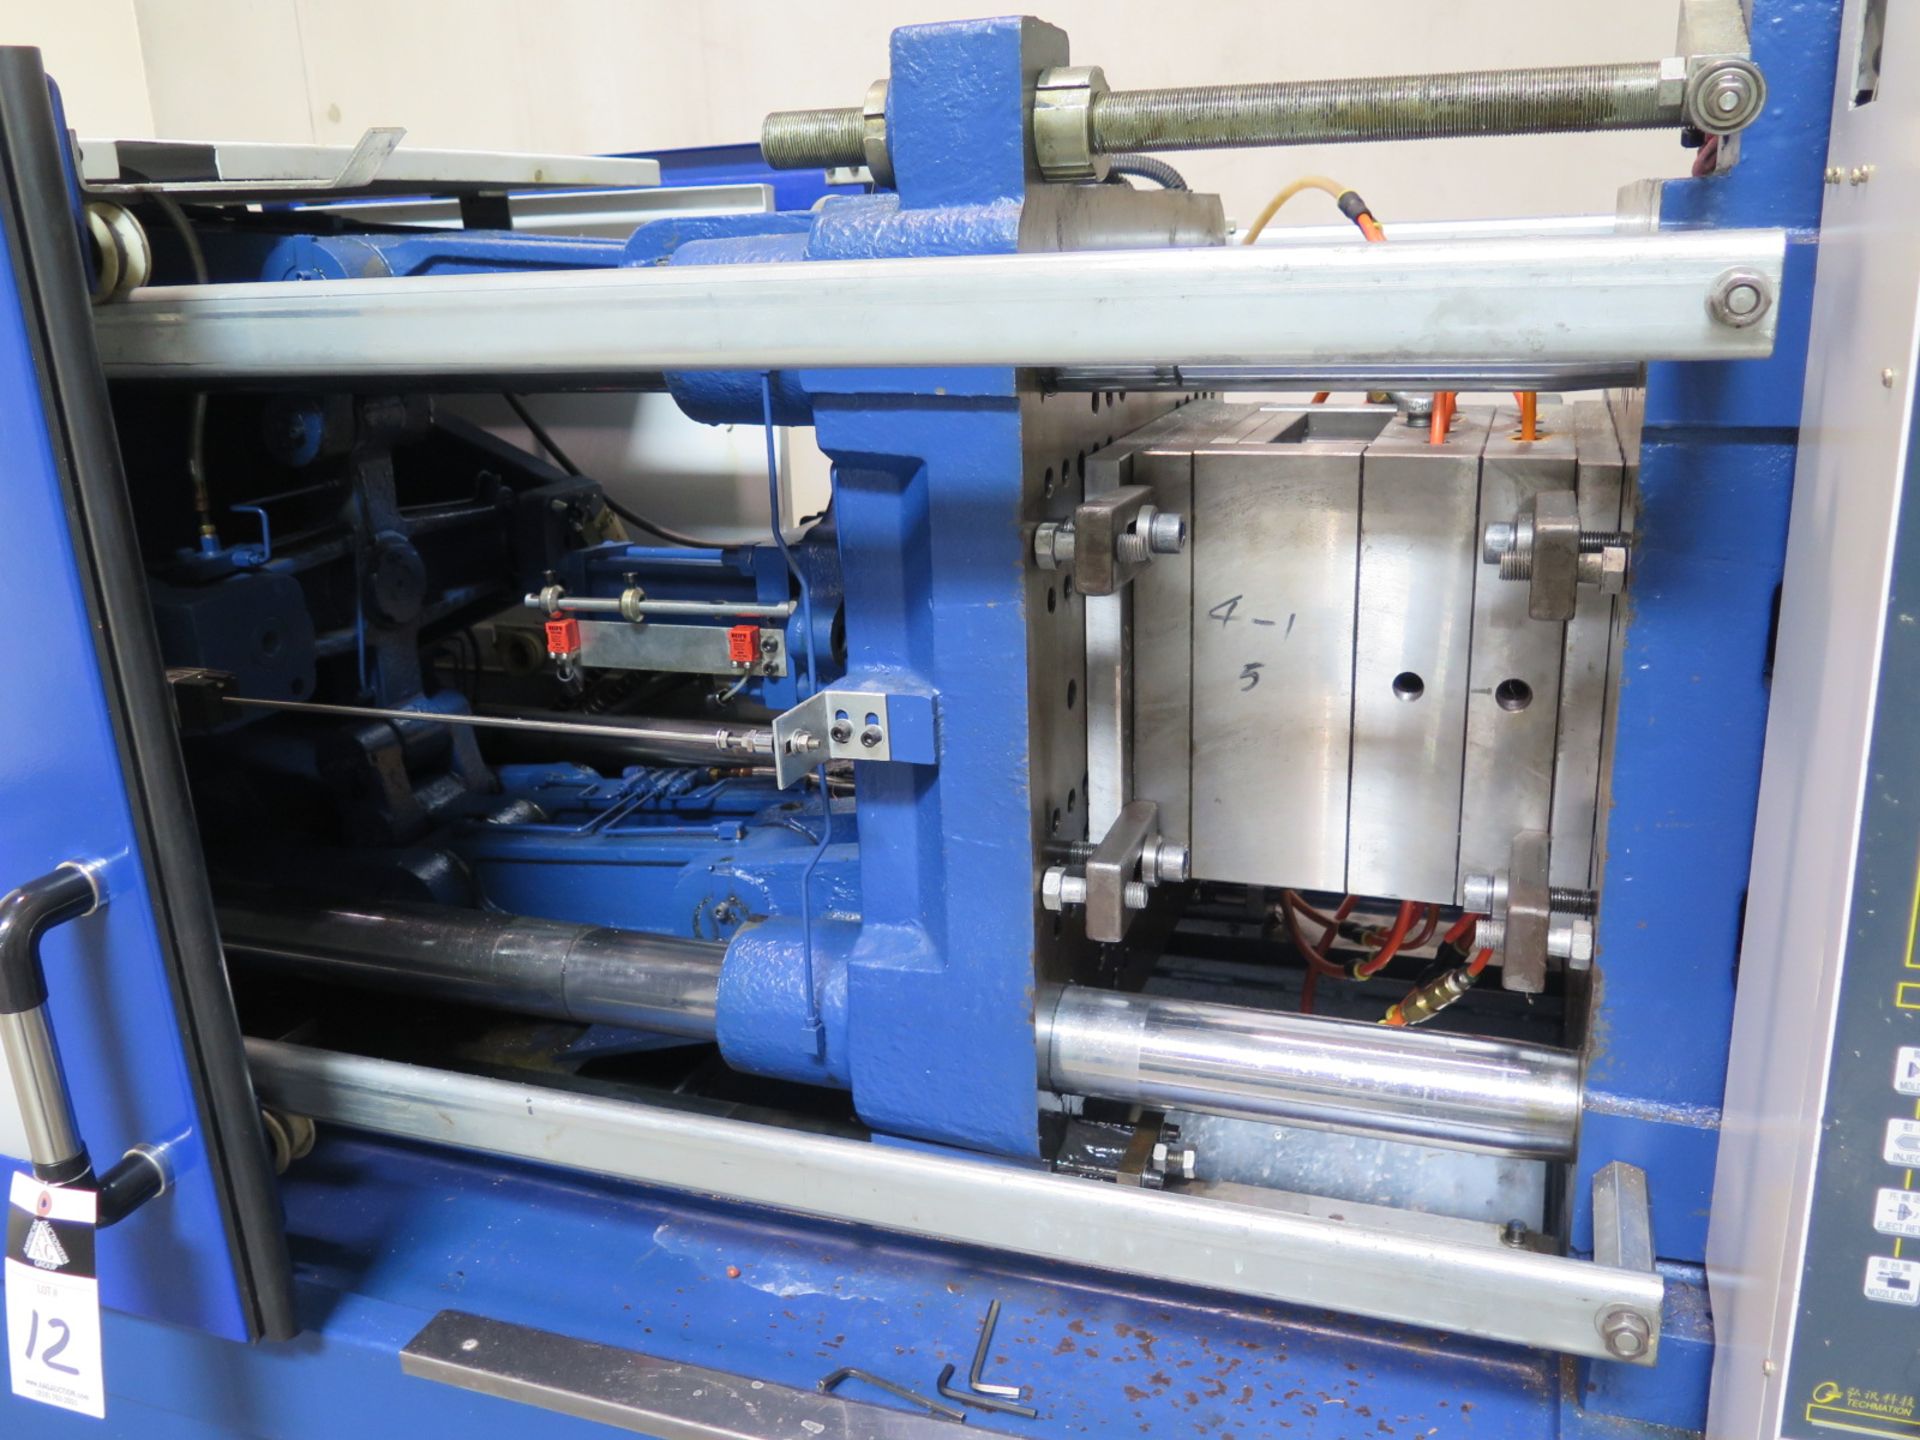 Import mdl. Tx128F CNC Plastic Injection Molding Machine w/ Techmation CNC Controls - Image 6 of 7